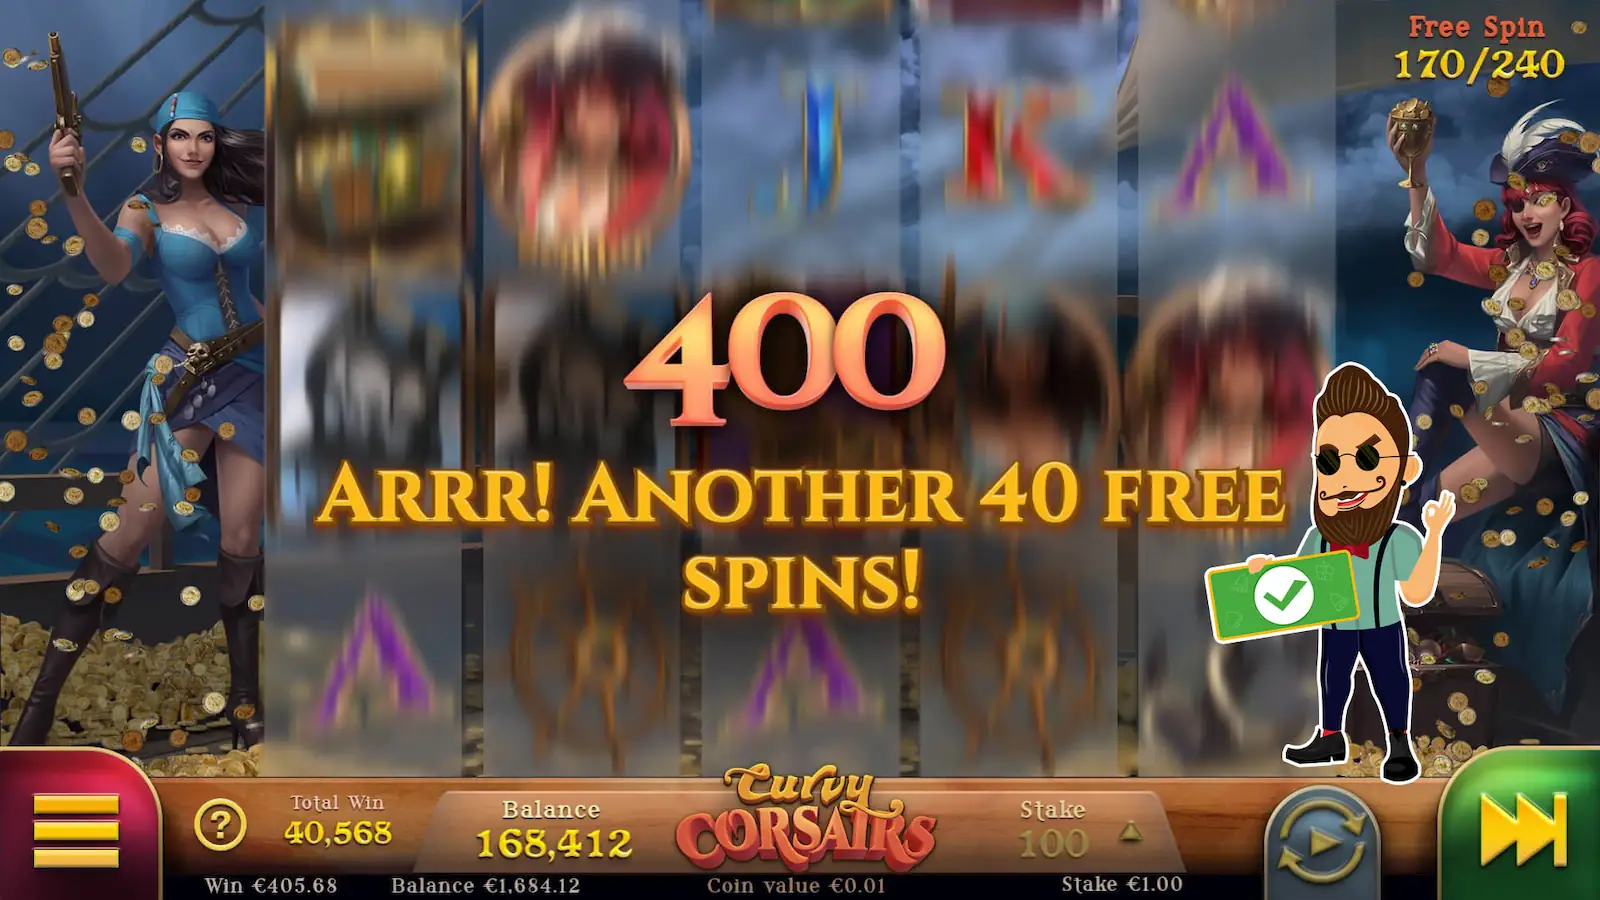 Tips & Tricks to Play Curvy Corsairs Slot